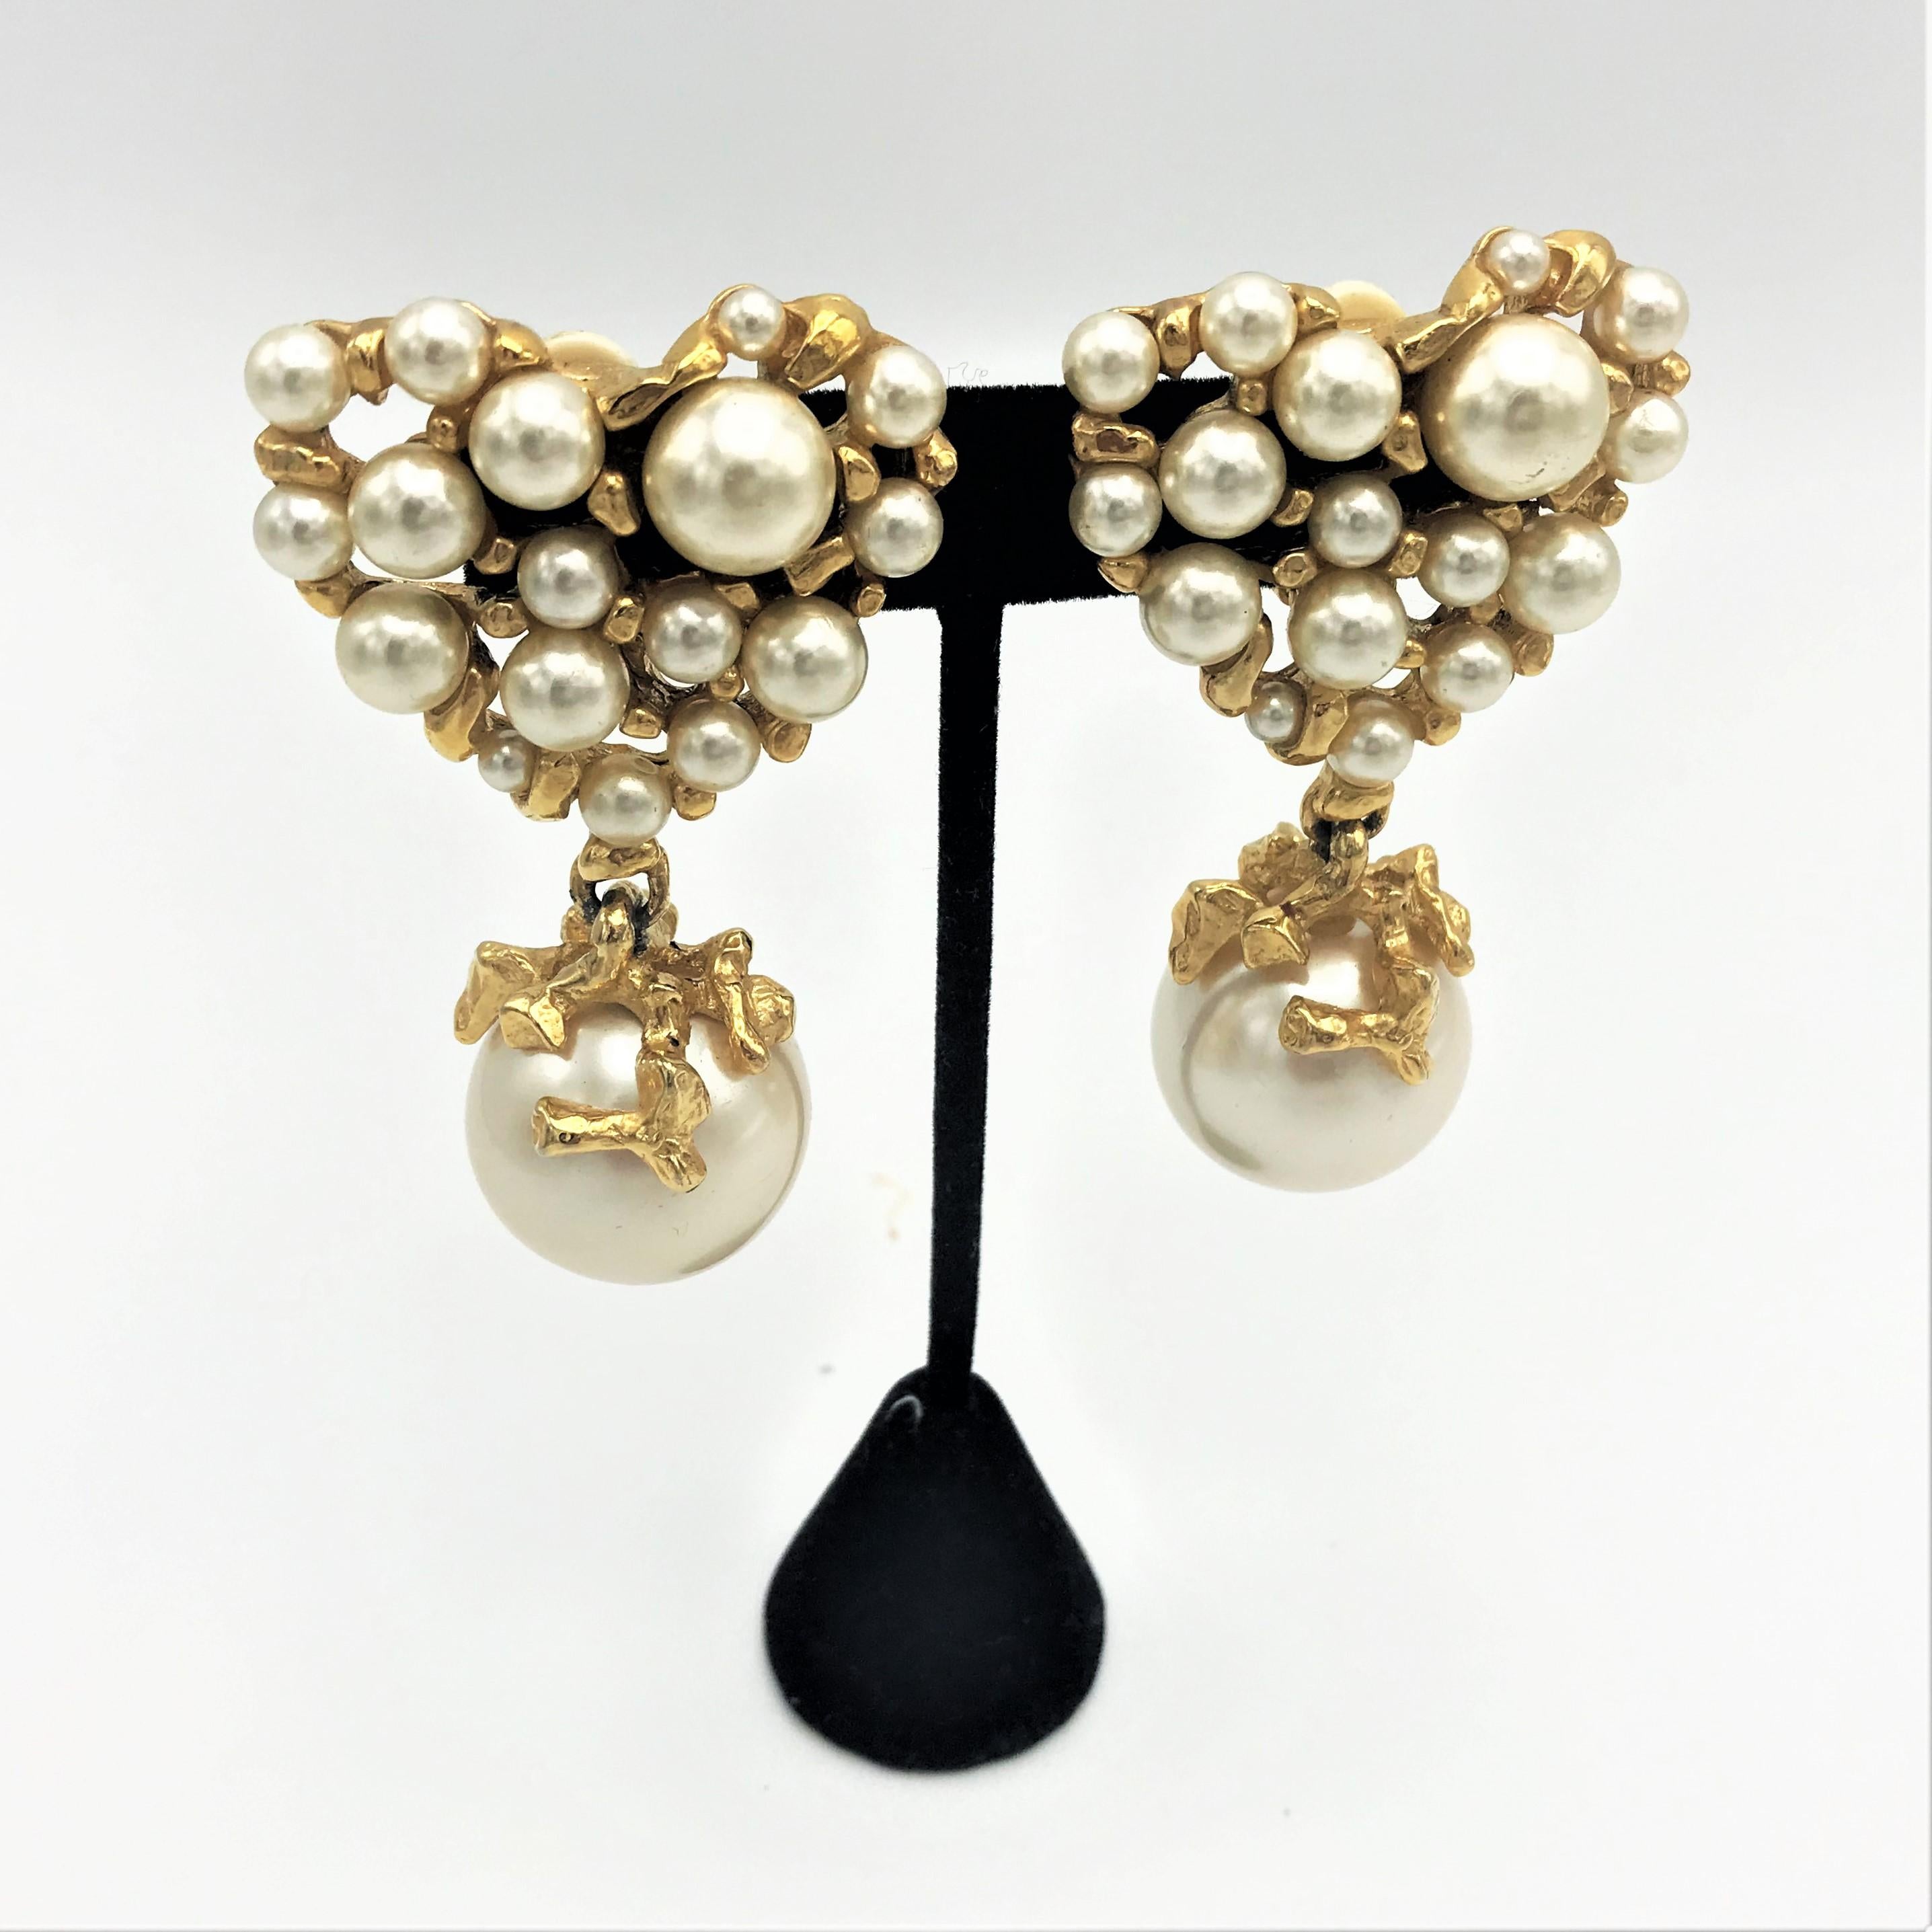 Women's Heart clip on earring with many faux pearls, signed Guy Laroche Paris 1990s